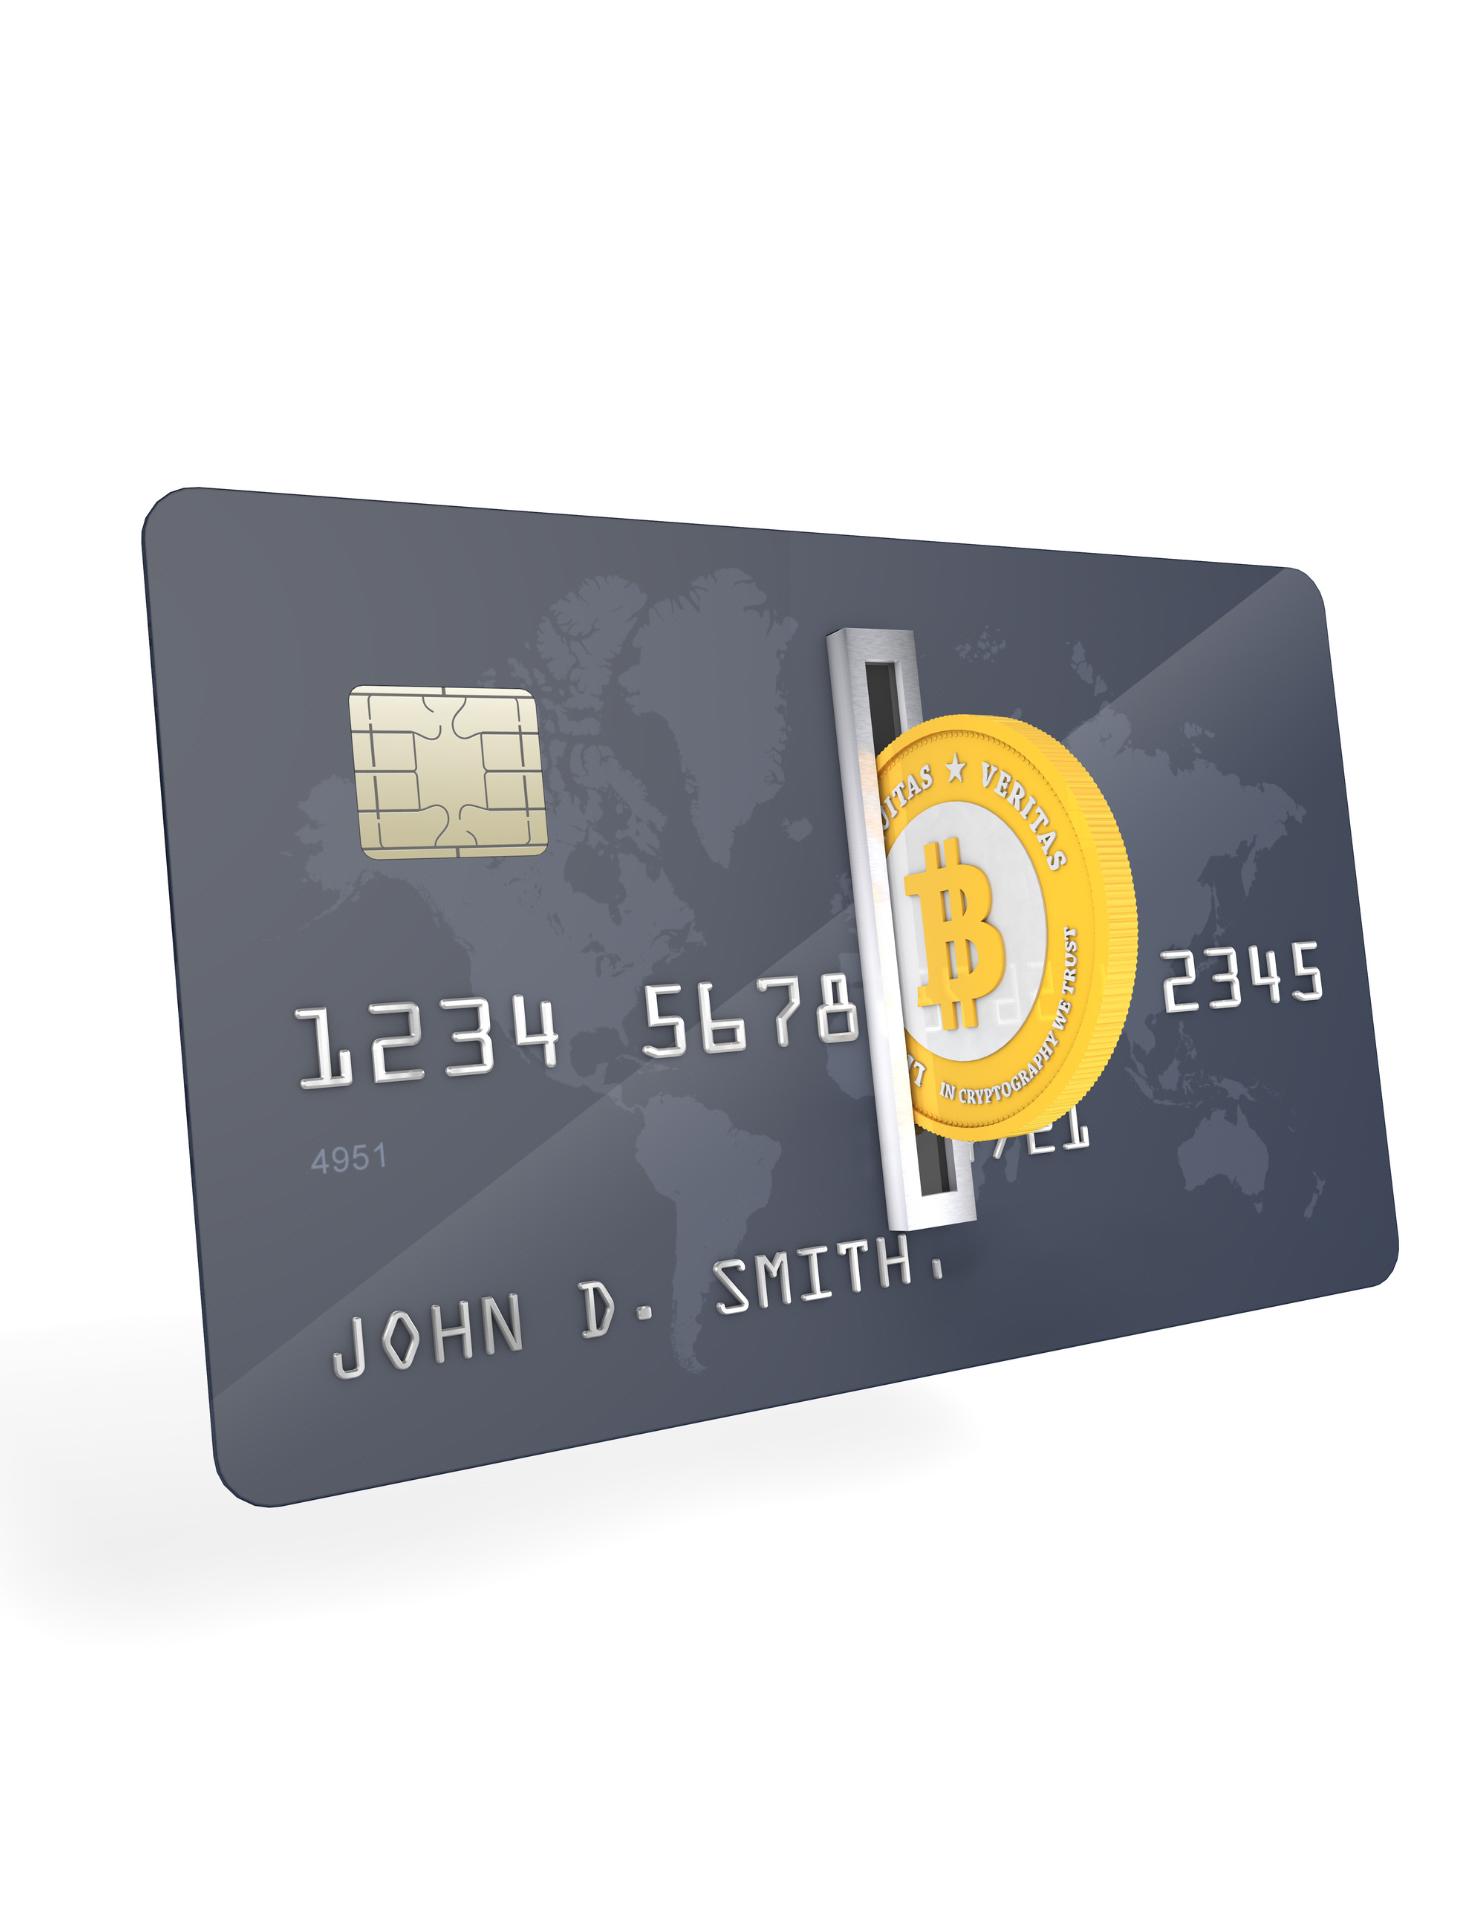 prepaid crypto debit card anonymous